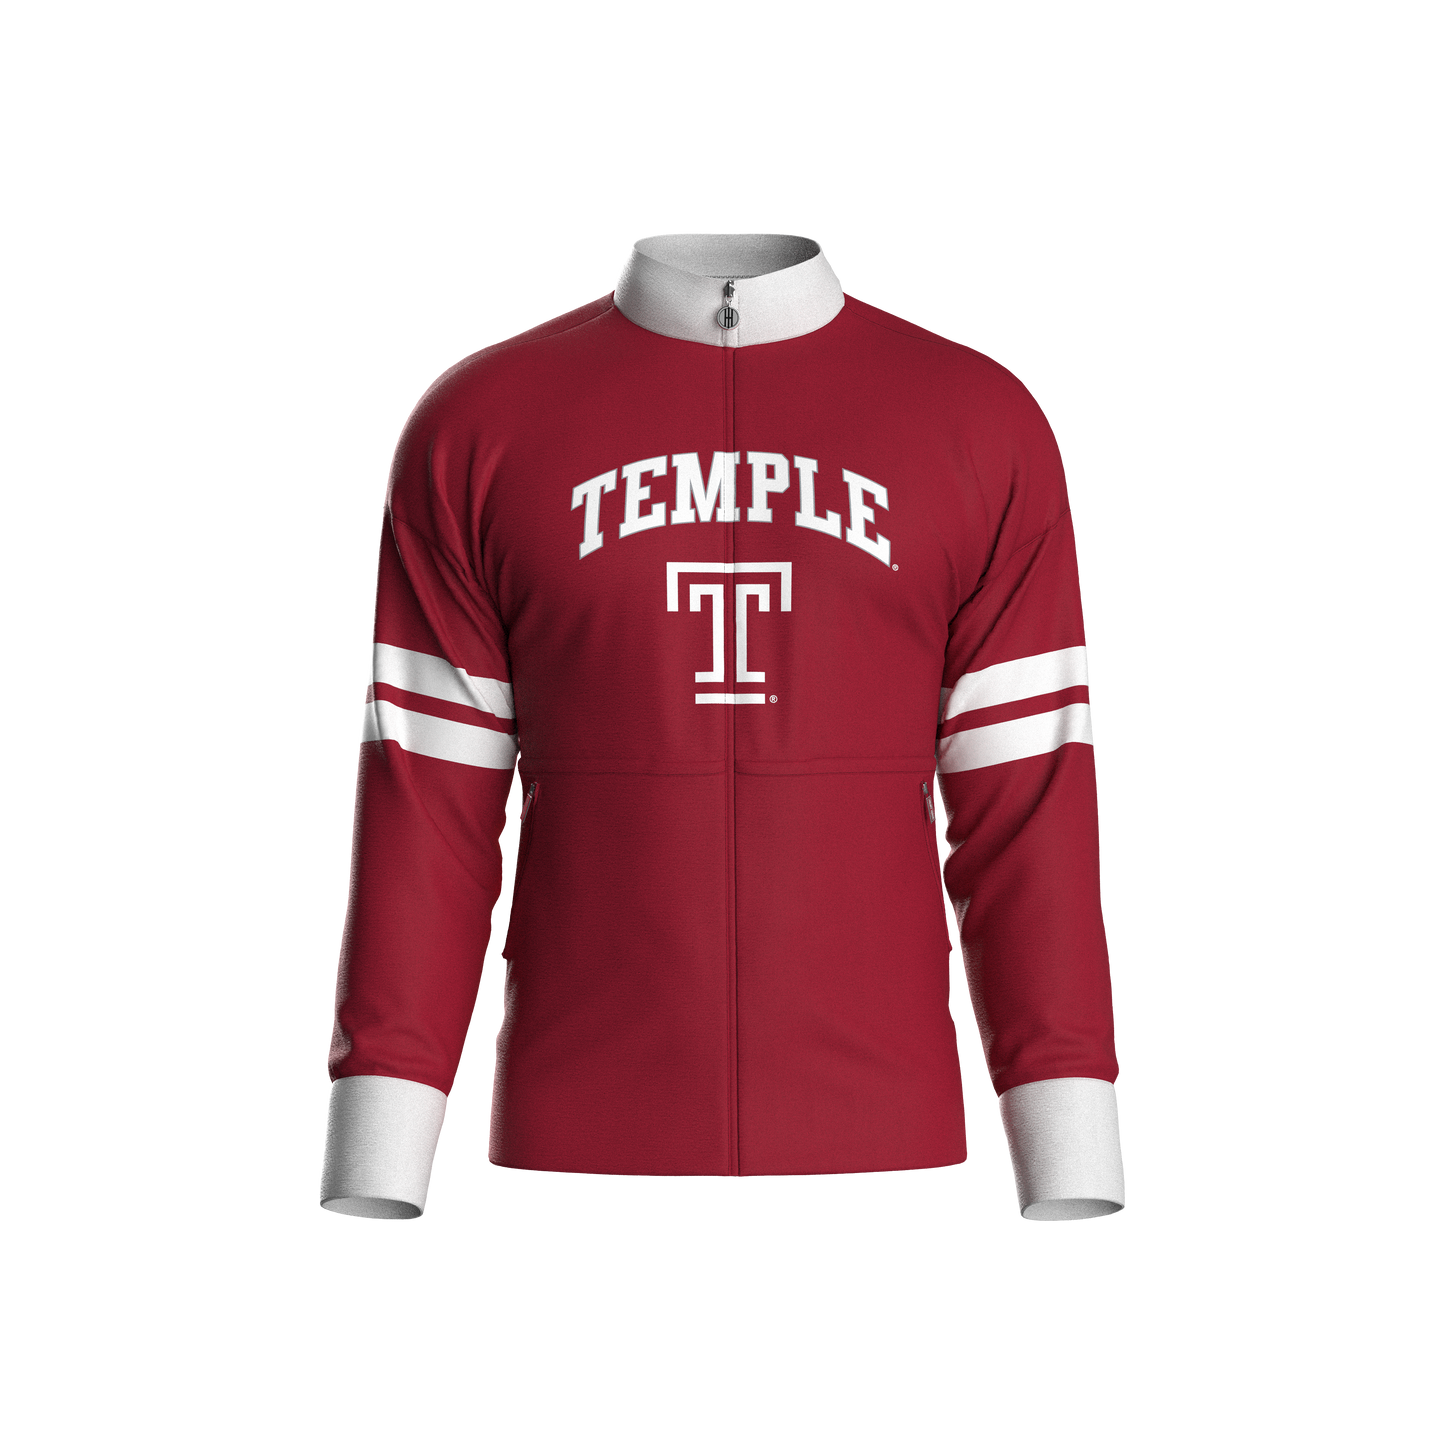 Temple University Home Zip-Up (adult)